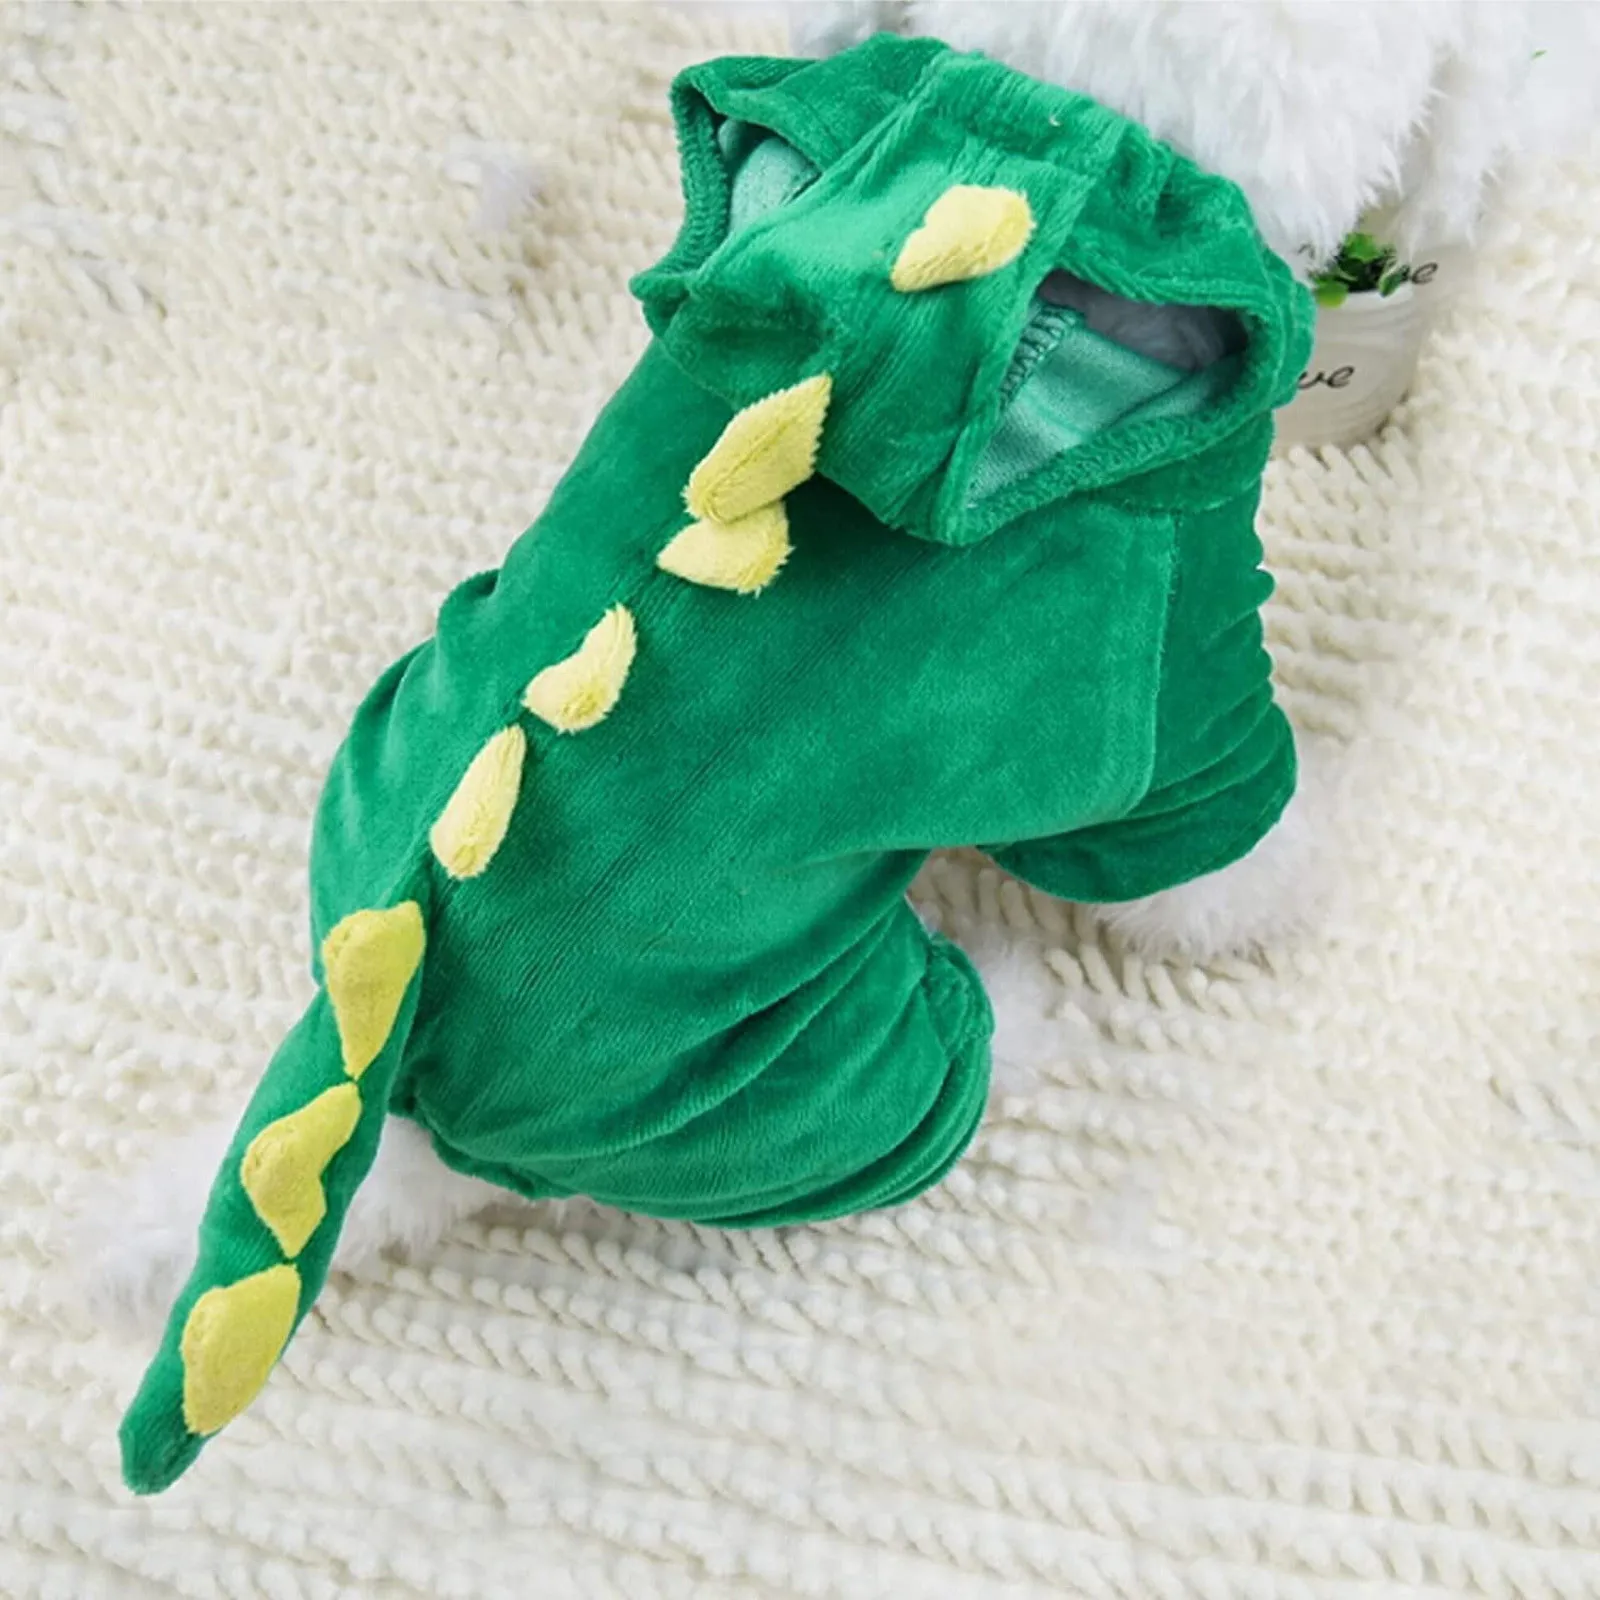 DELIFUR Dinosaur Dog Halloween Costume Pet Dino Hoodie for Small Dogs Cats 